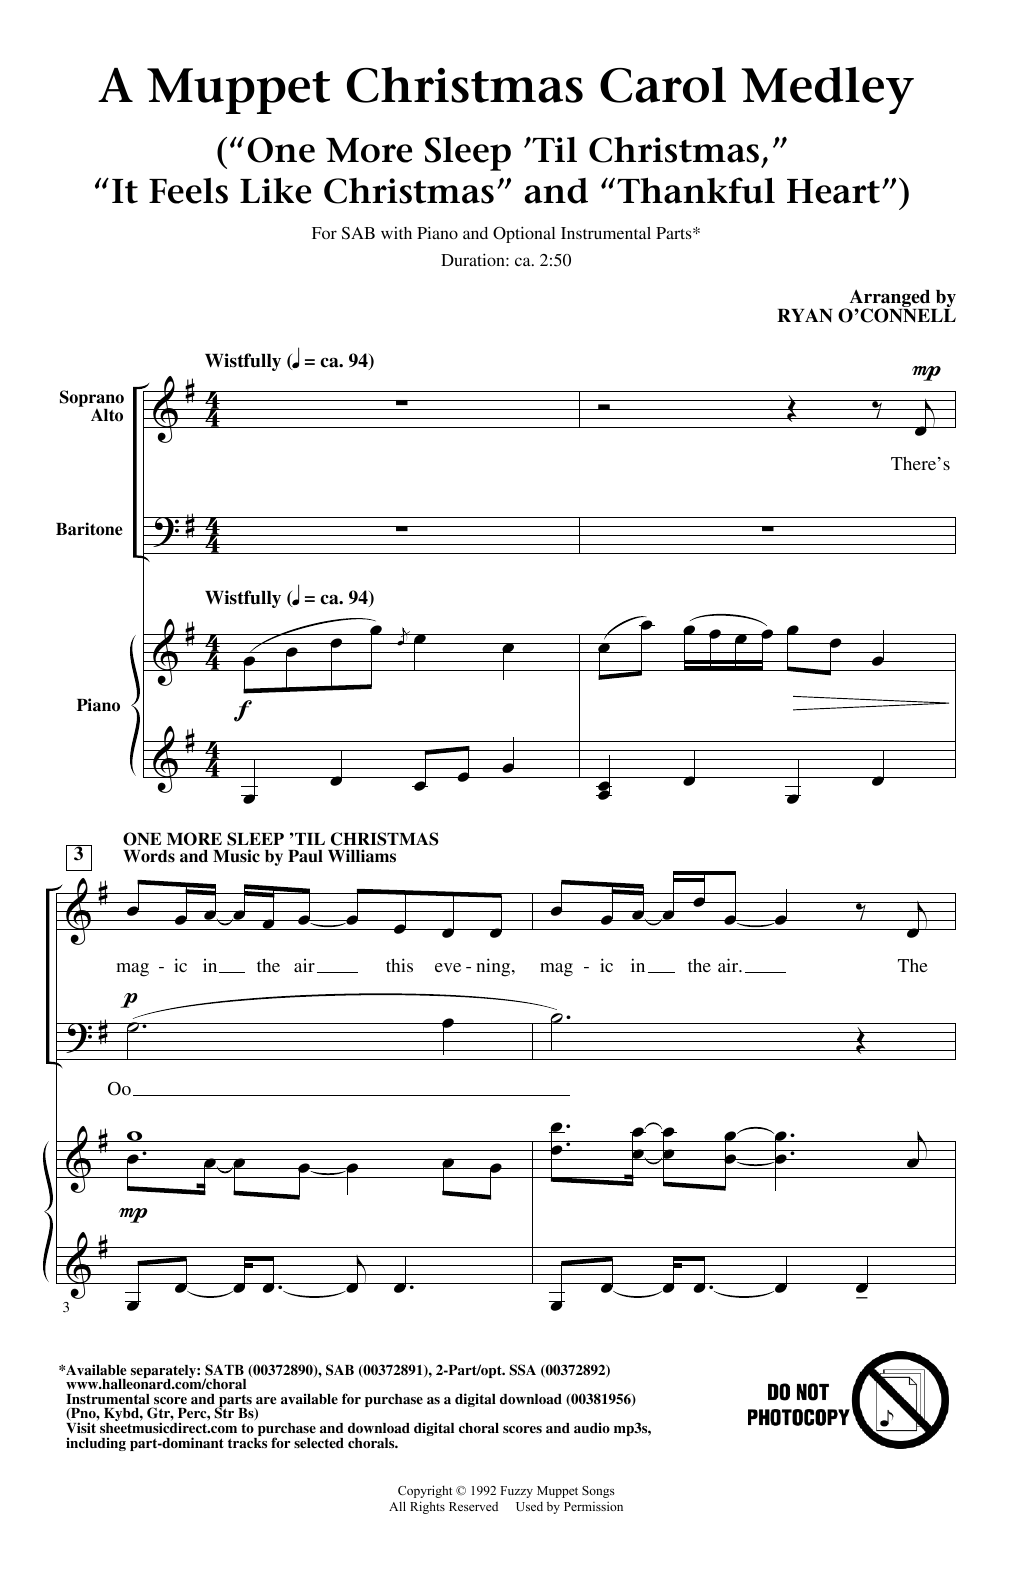 Ryan O'Connell Muppet Christmas Carol Medley (from The Muppet Christmas Carol) Sheet Music Notes & Chords for SAB Choir - Download or Print PDF